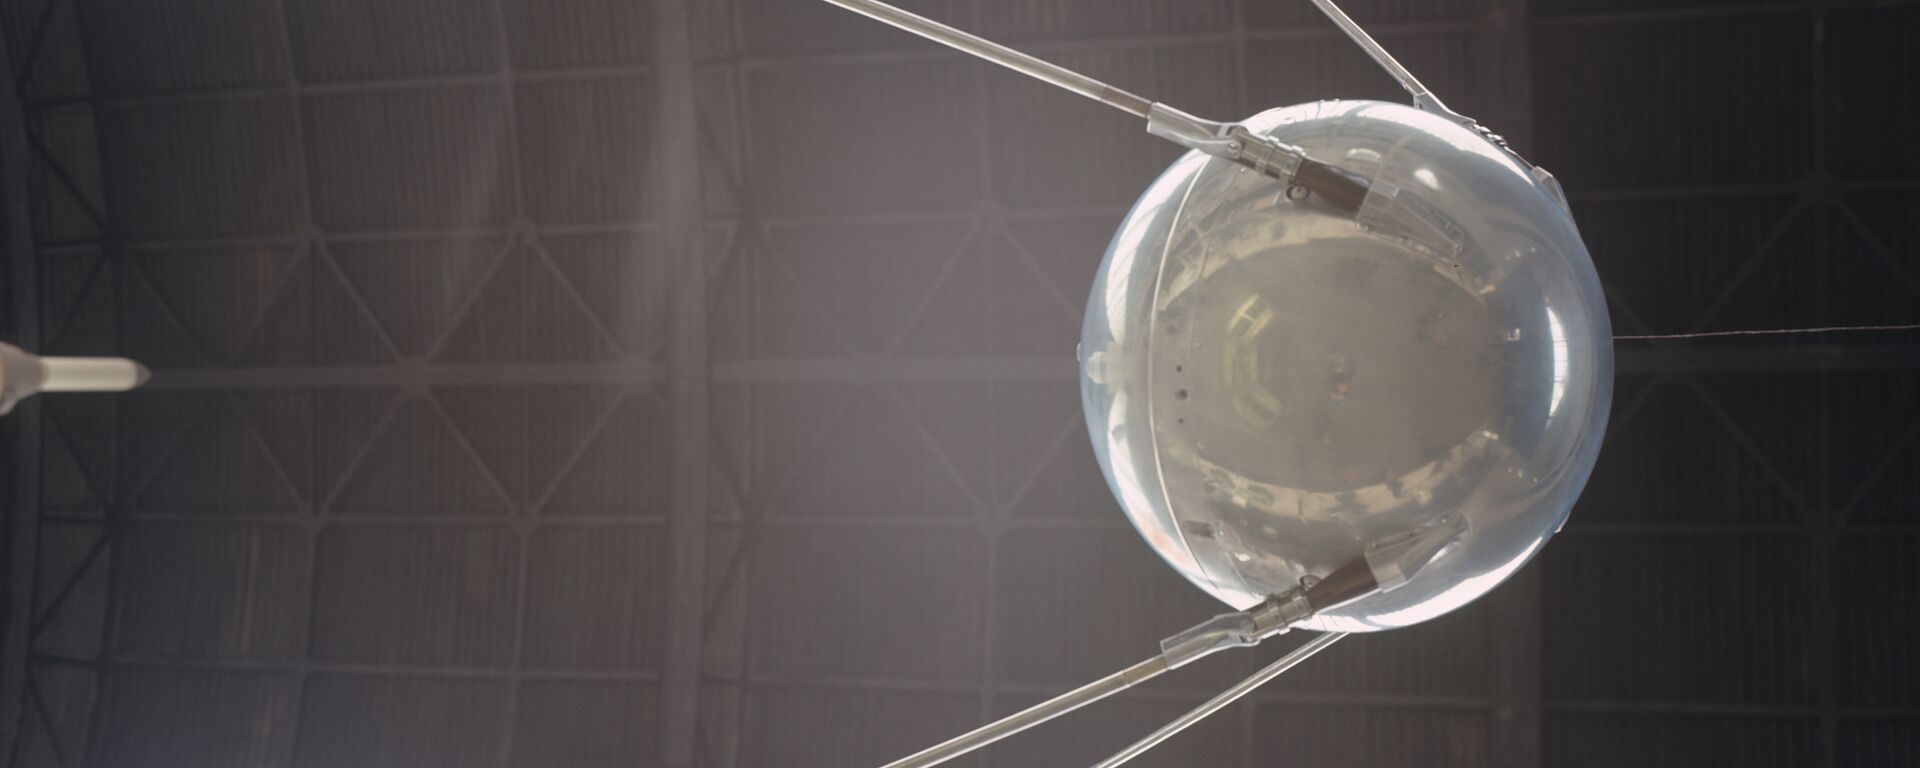 El Sputnik 1, el primer satélite artificial de la Tierra. - Sputnik Mundo, 1920, 04.10.2017